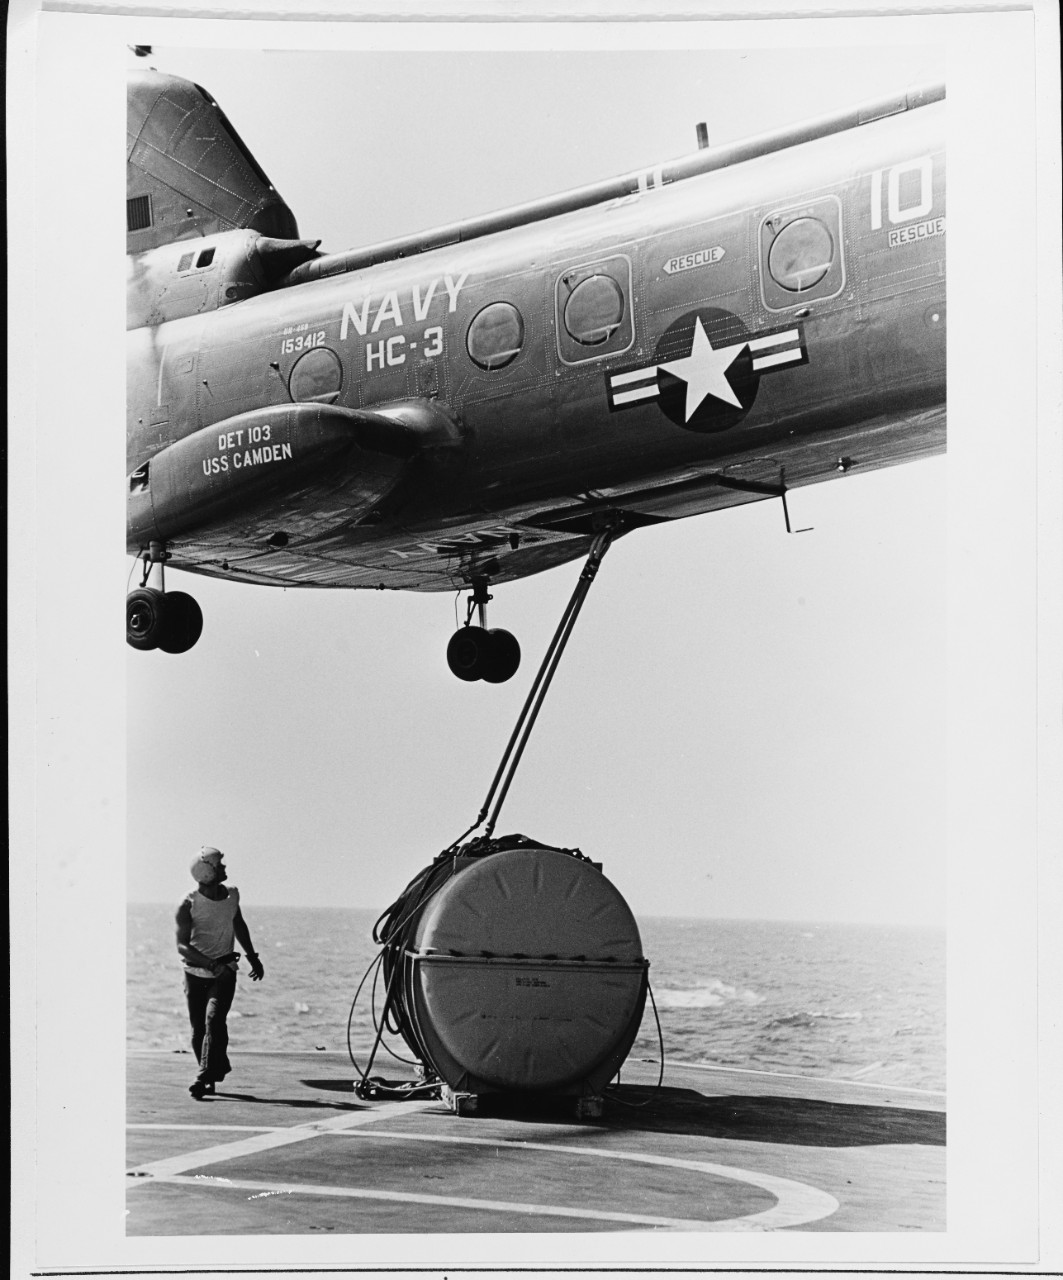 Transporting a Jet Engine from USS CAMDEN (AOE-2) to  USS CONSTELLATION (CVA-64)